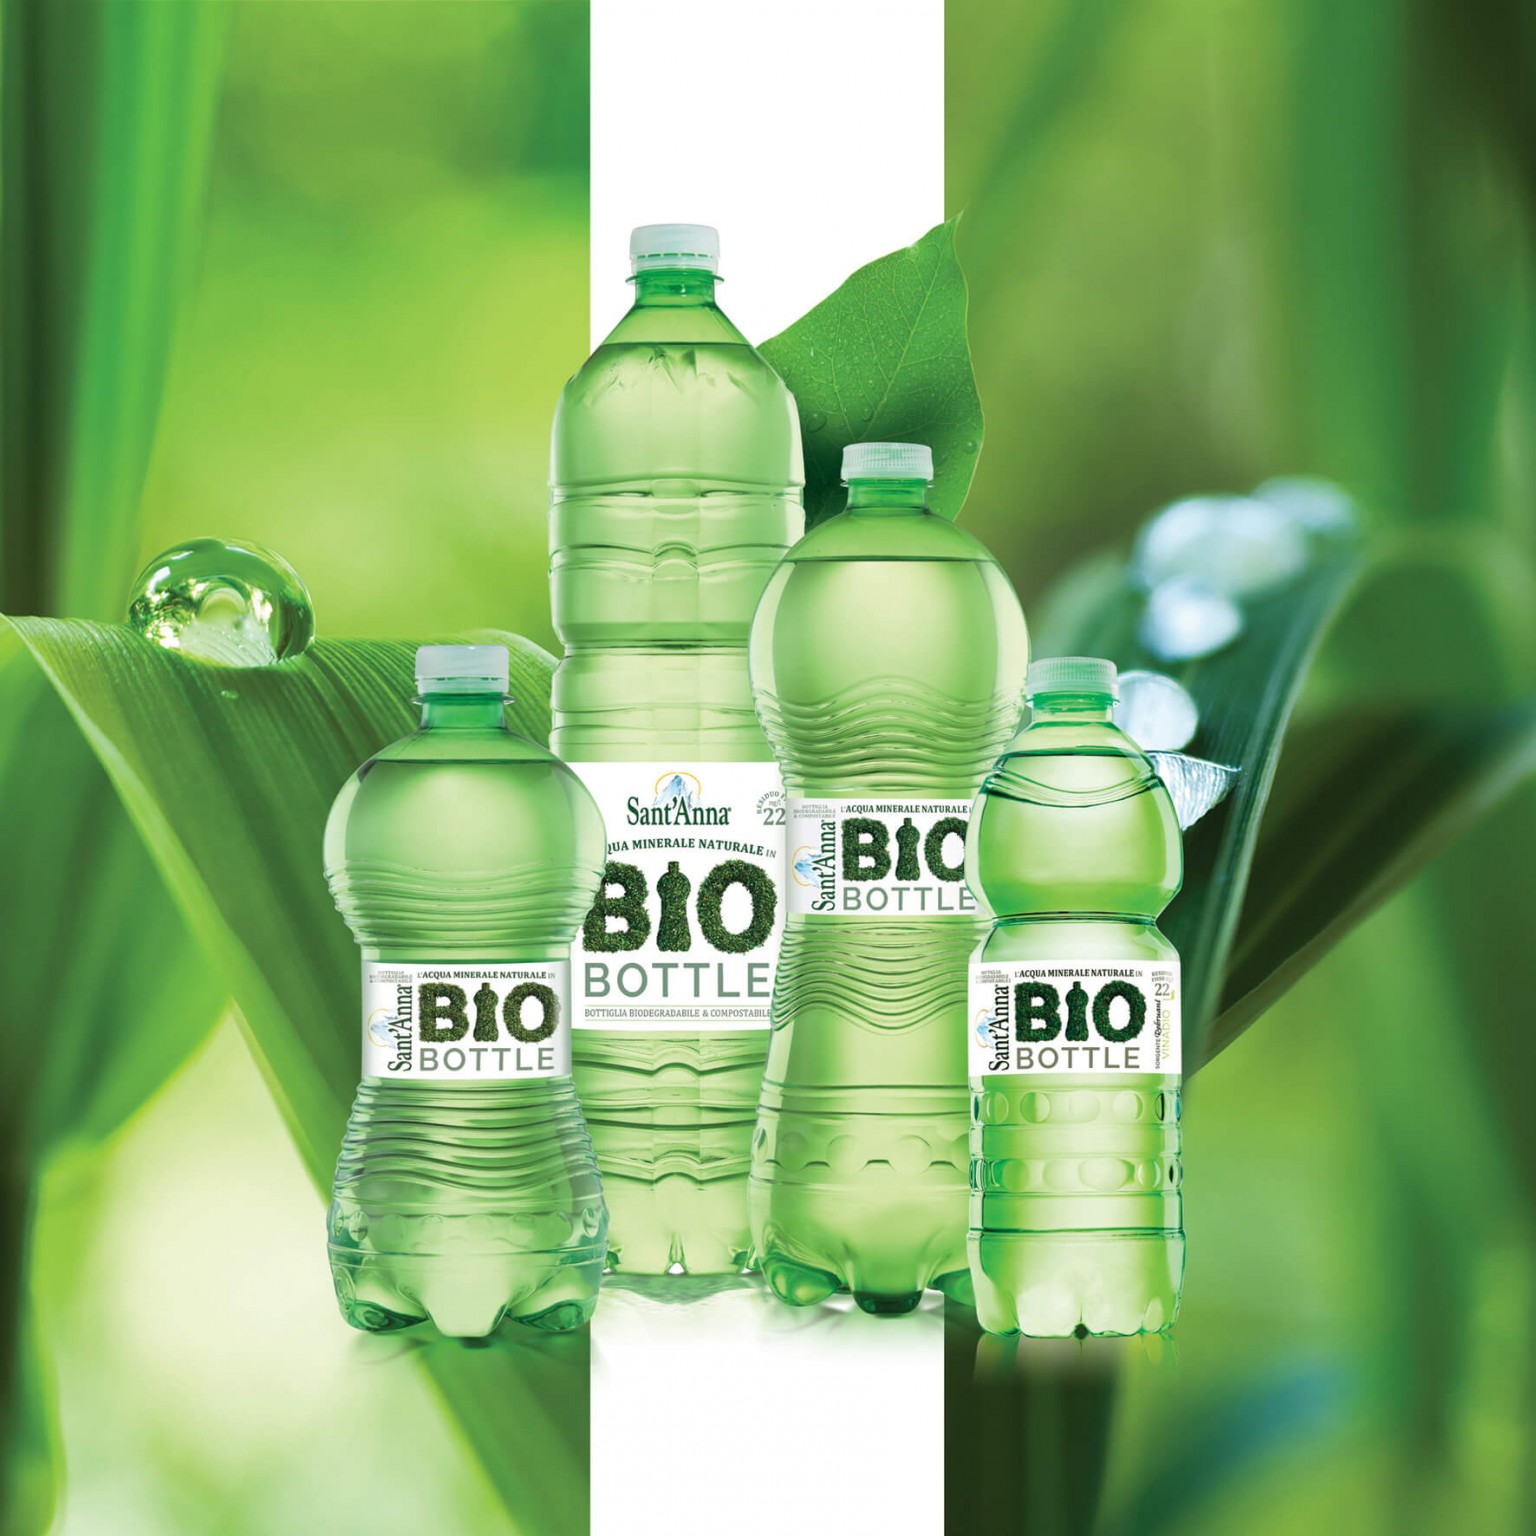 Bio bottle